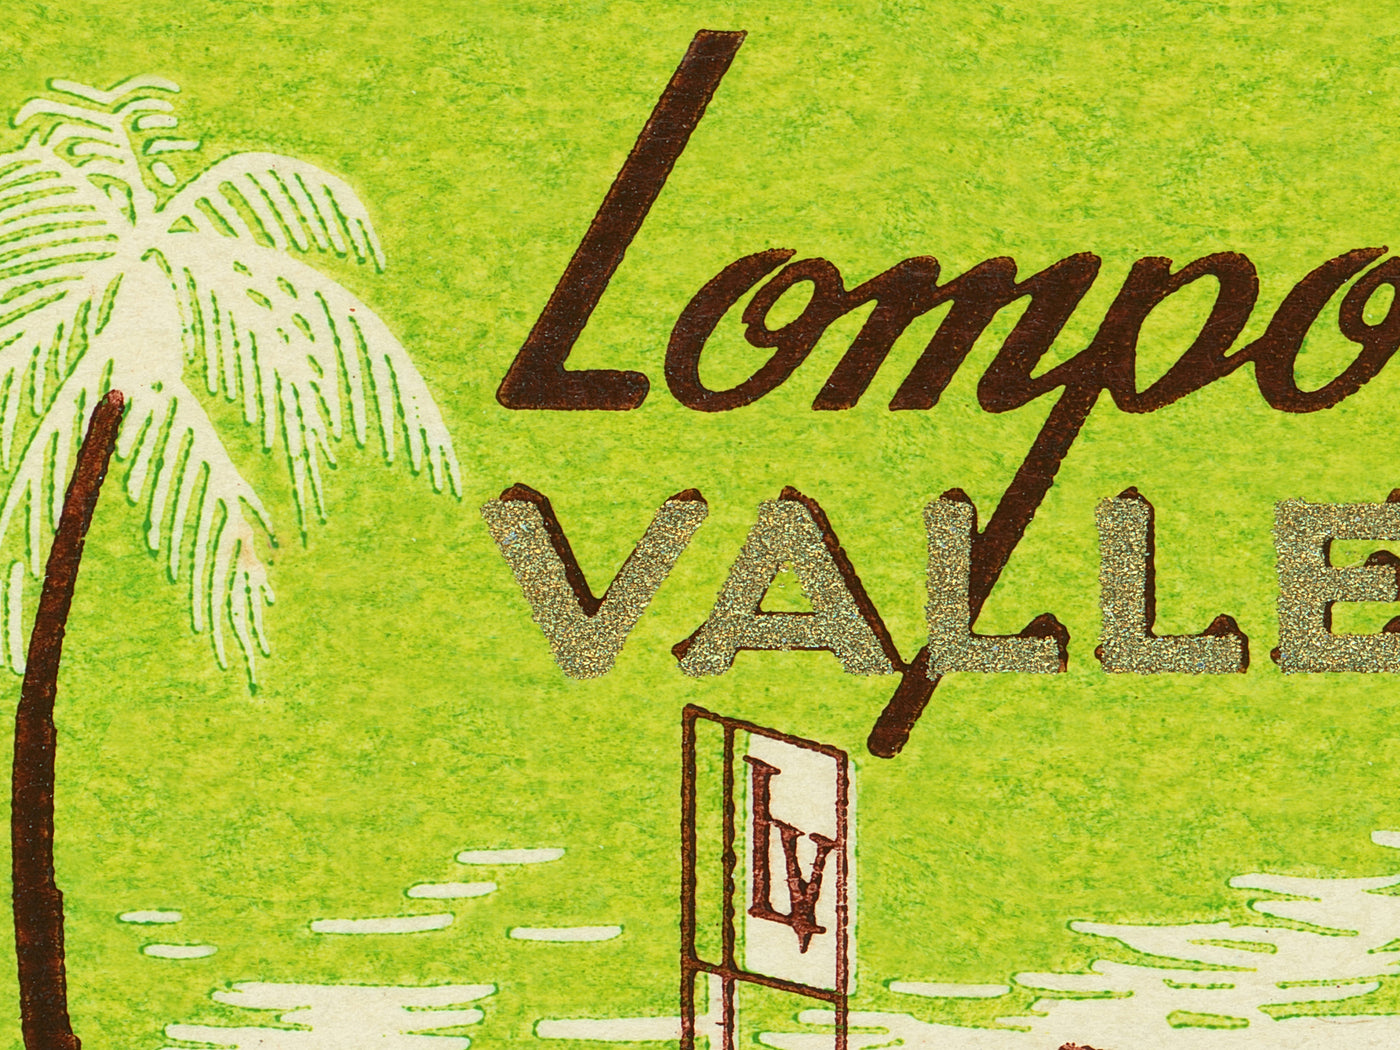 Lompoc Valley Bowl Matchbook Print